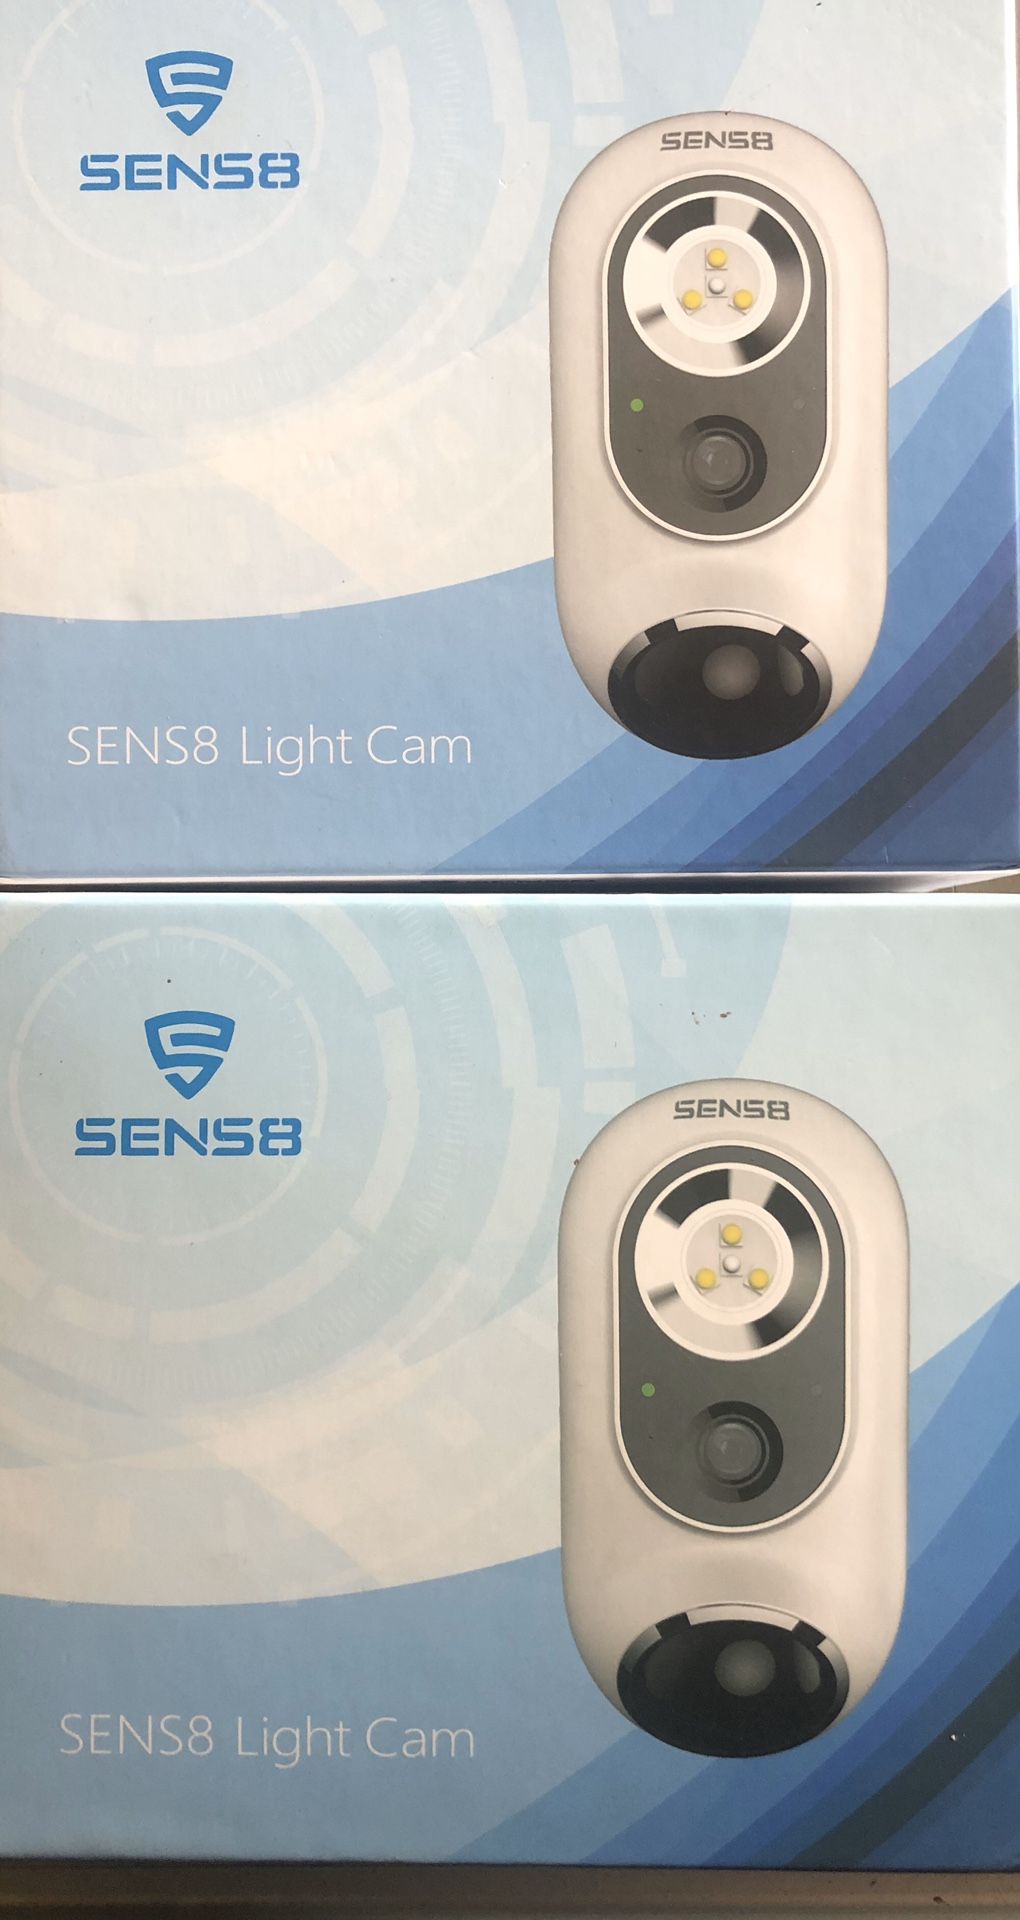 Sense 8 Security Camera